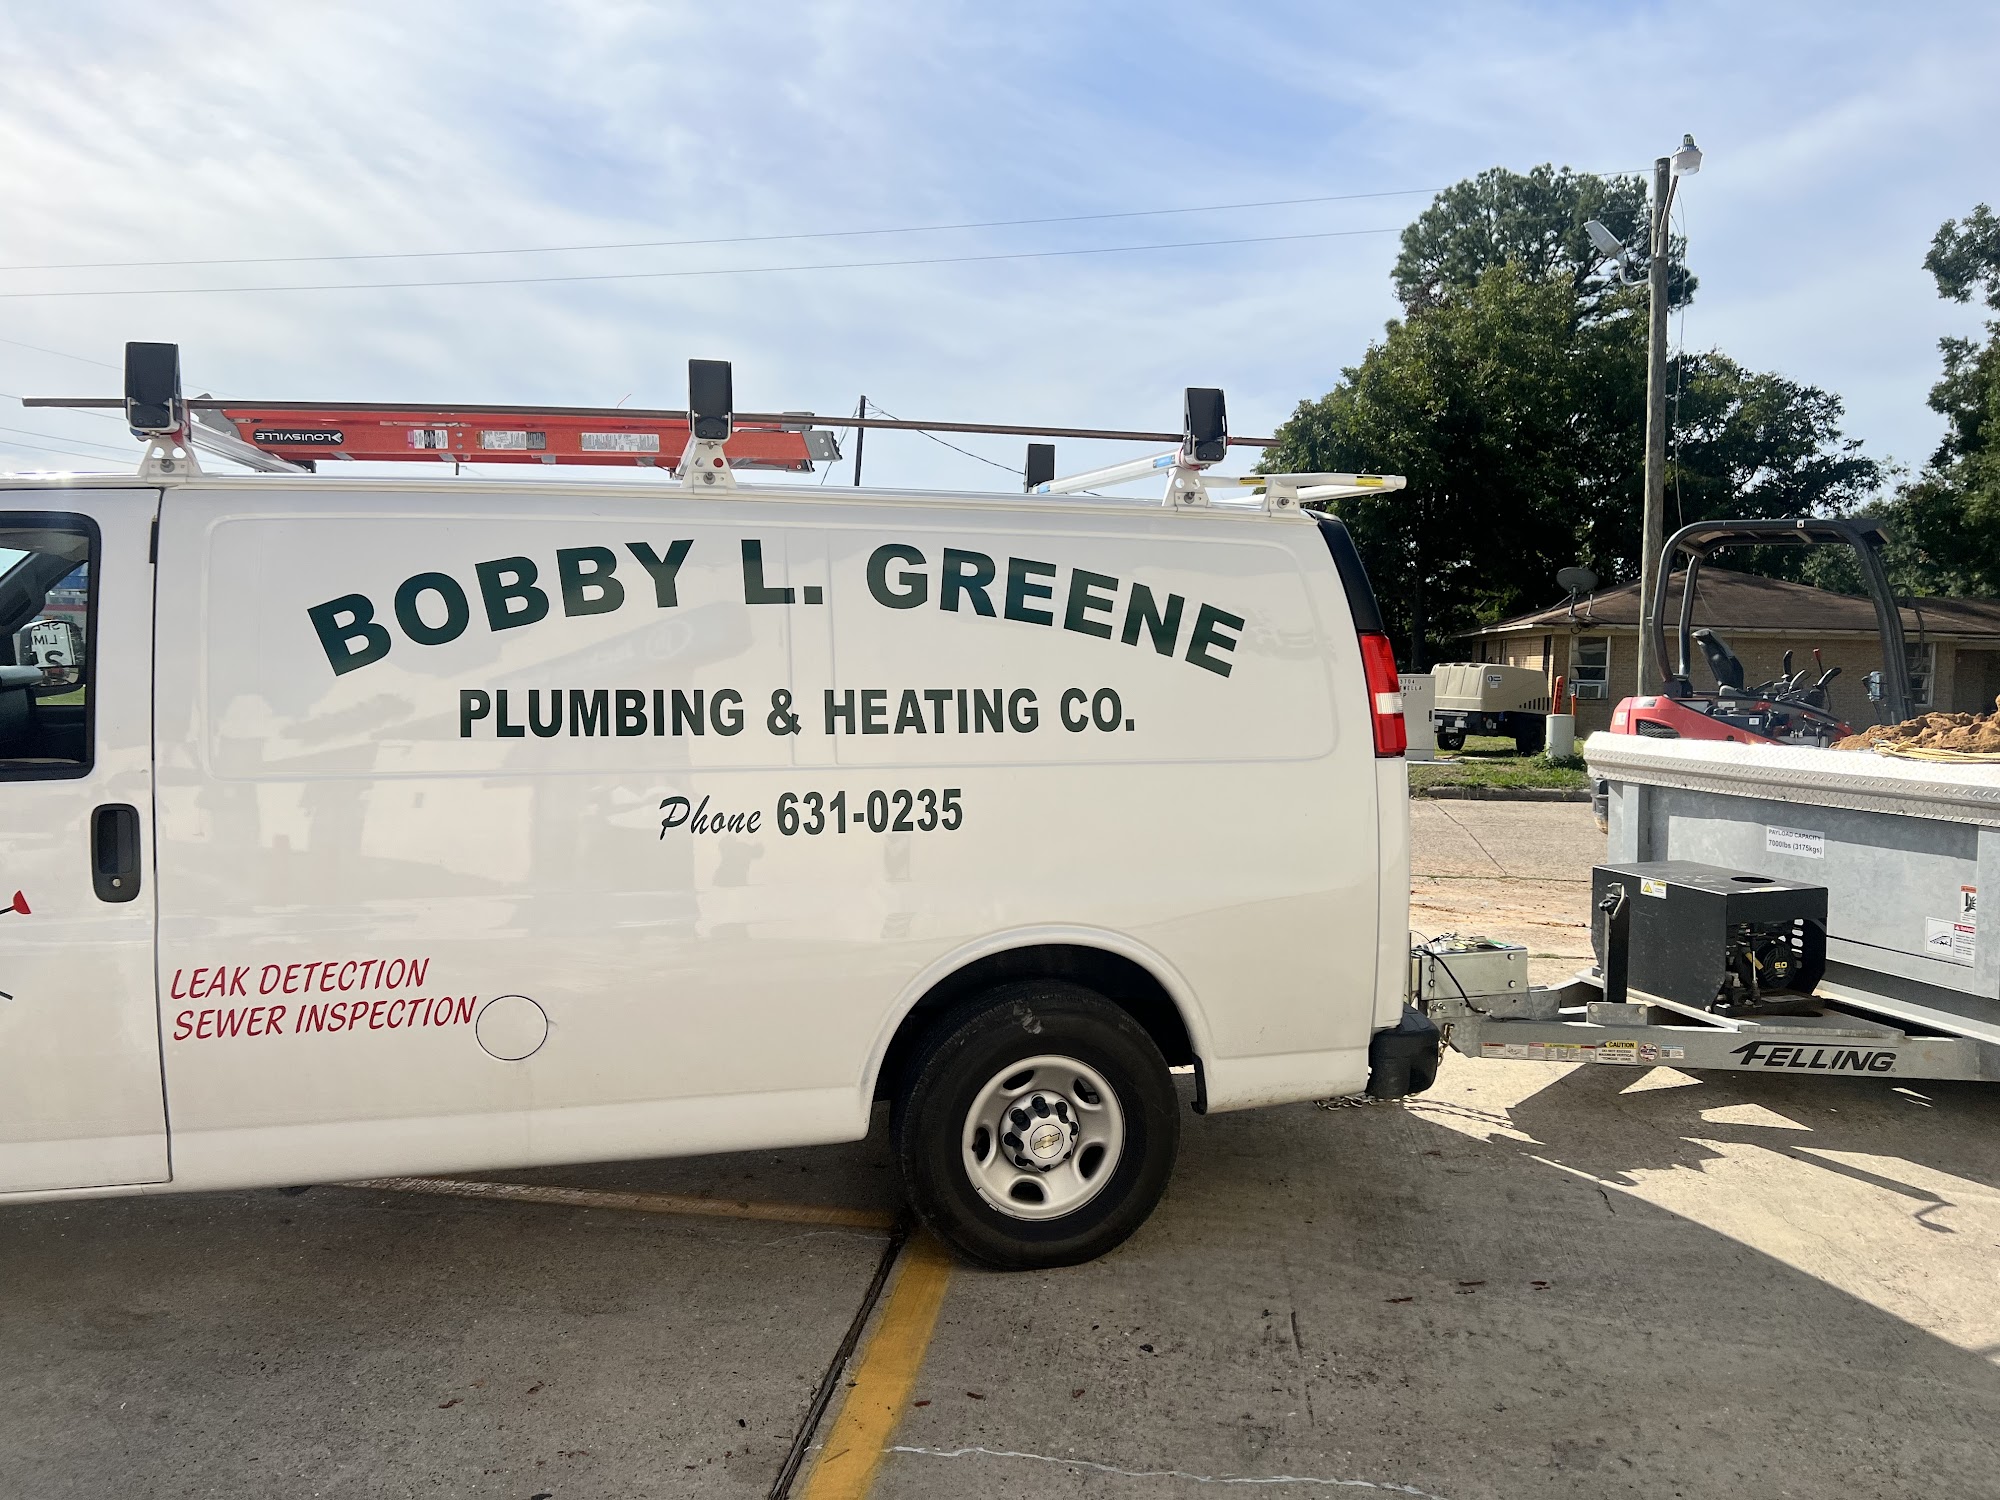 Bobby L. Greene Plumbing, Heating & Cooling Co.